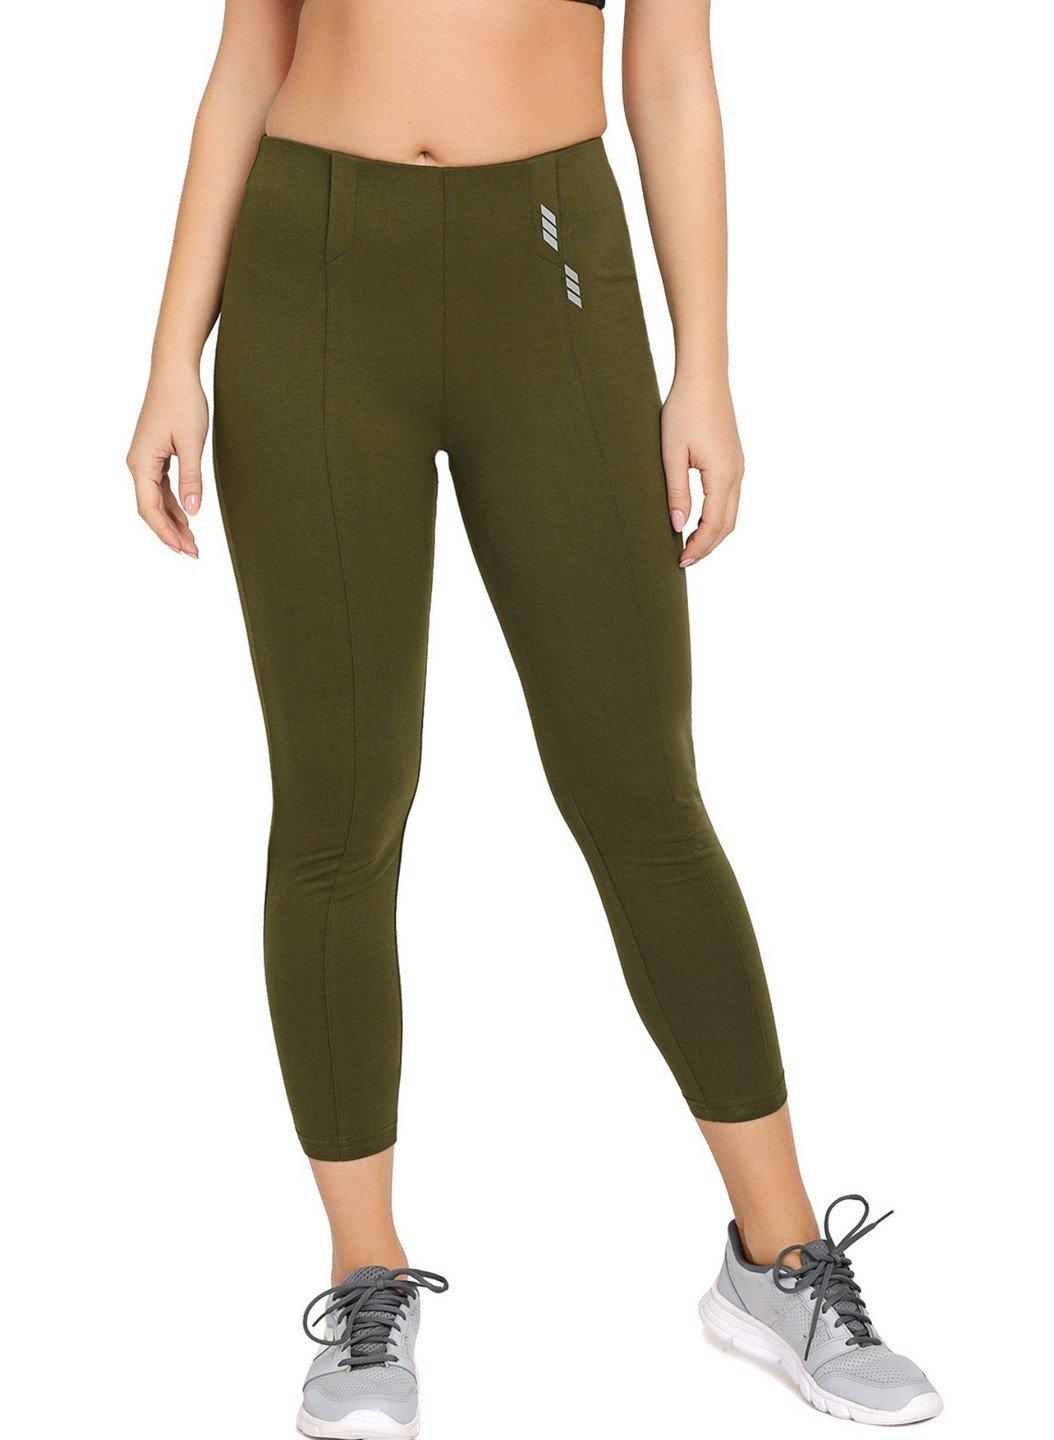 Lovable Green Cotton Ankle Length Tights Yoga Pants - Stilento